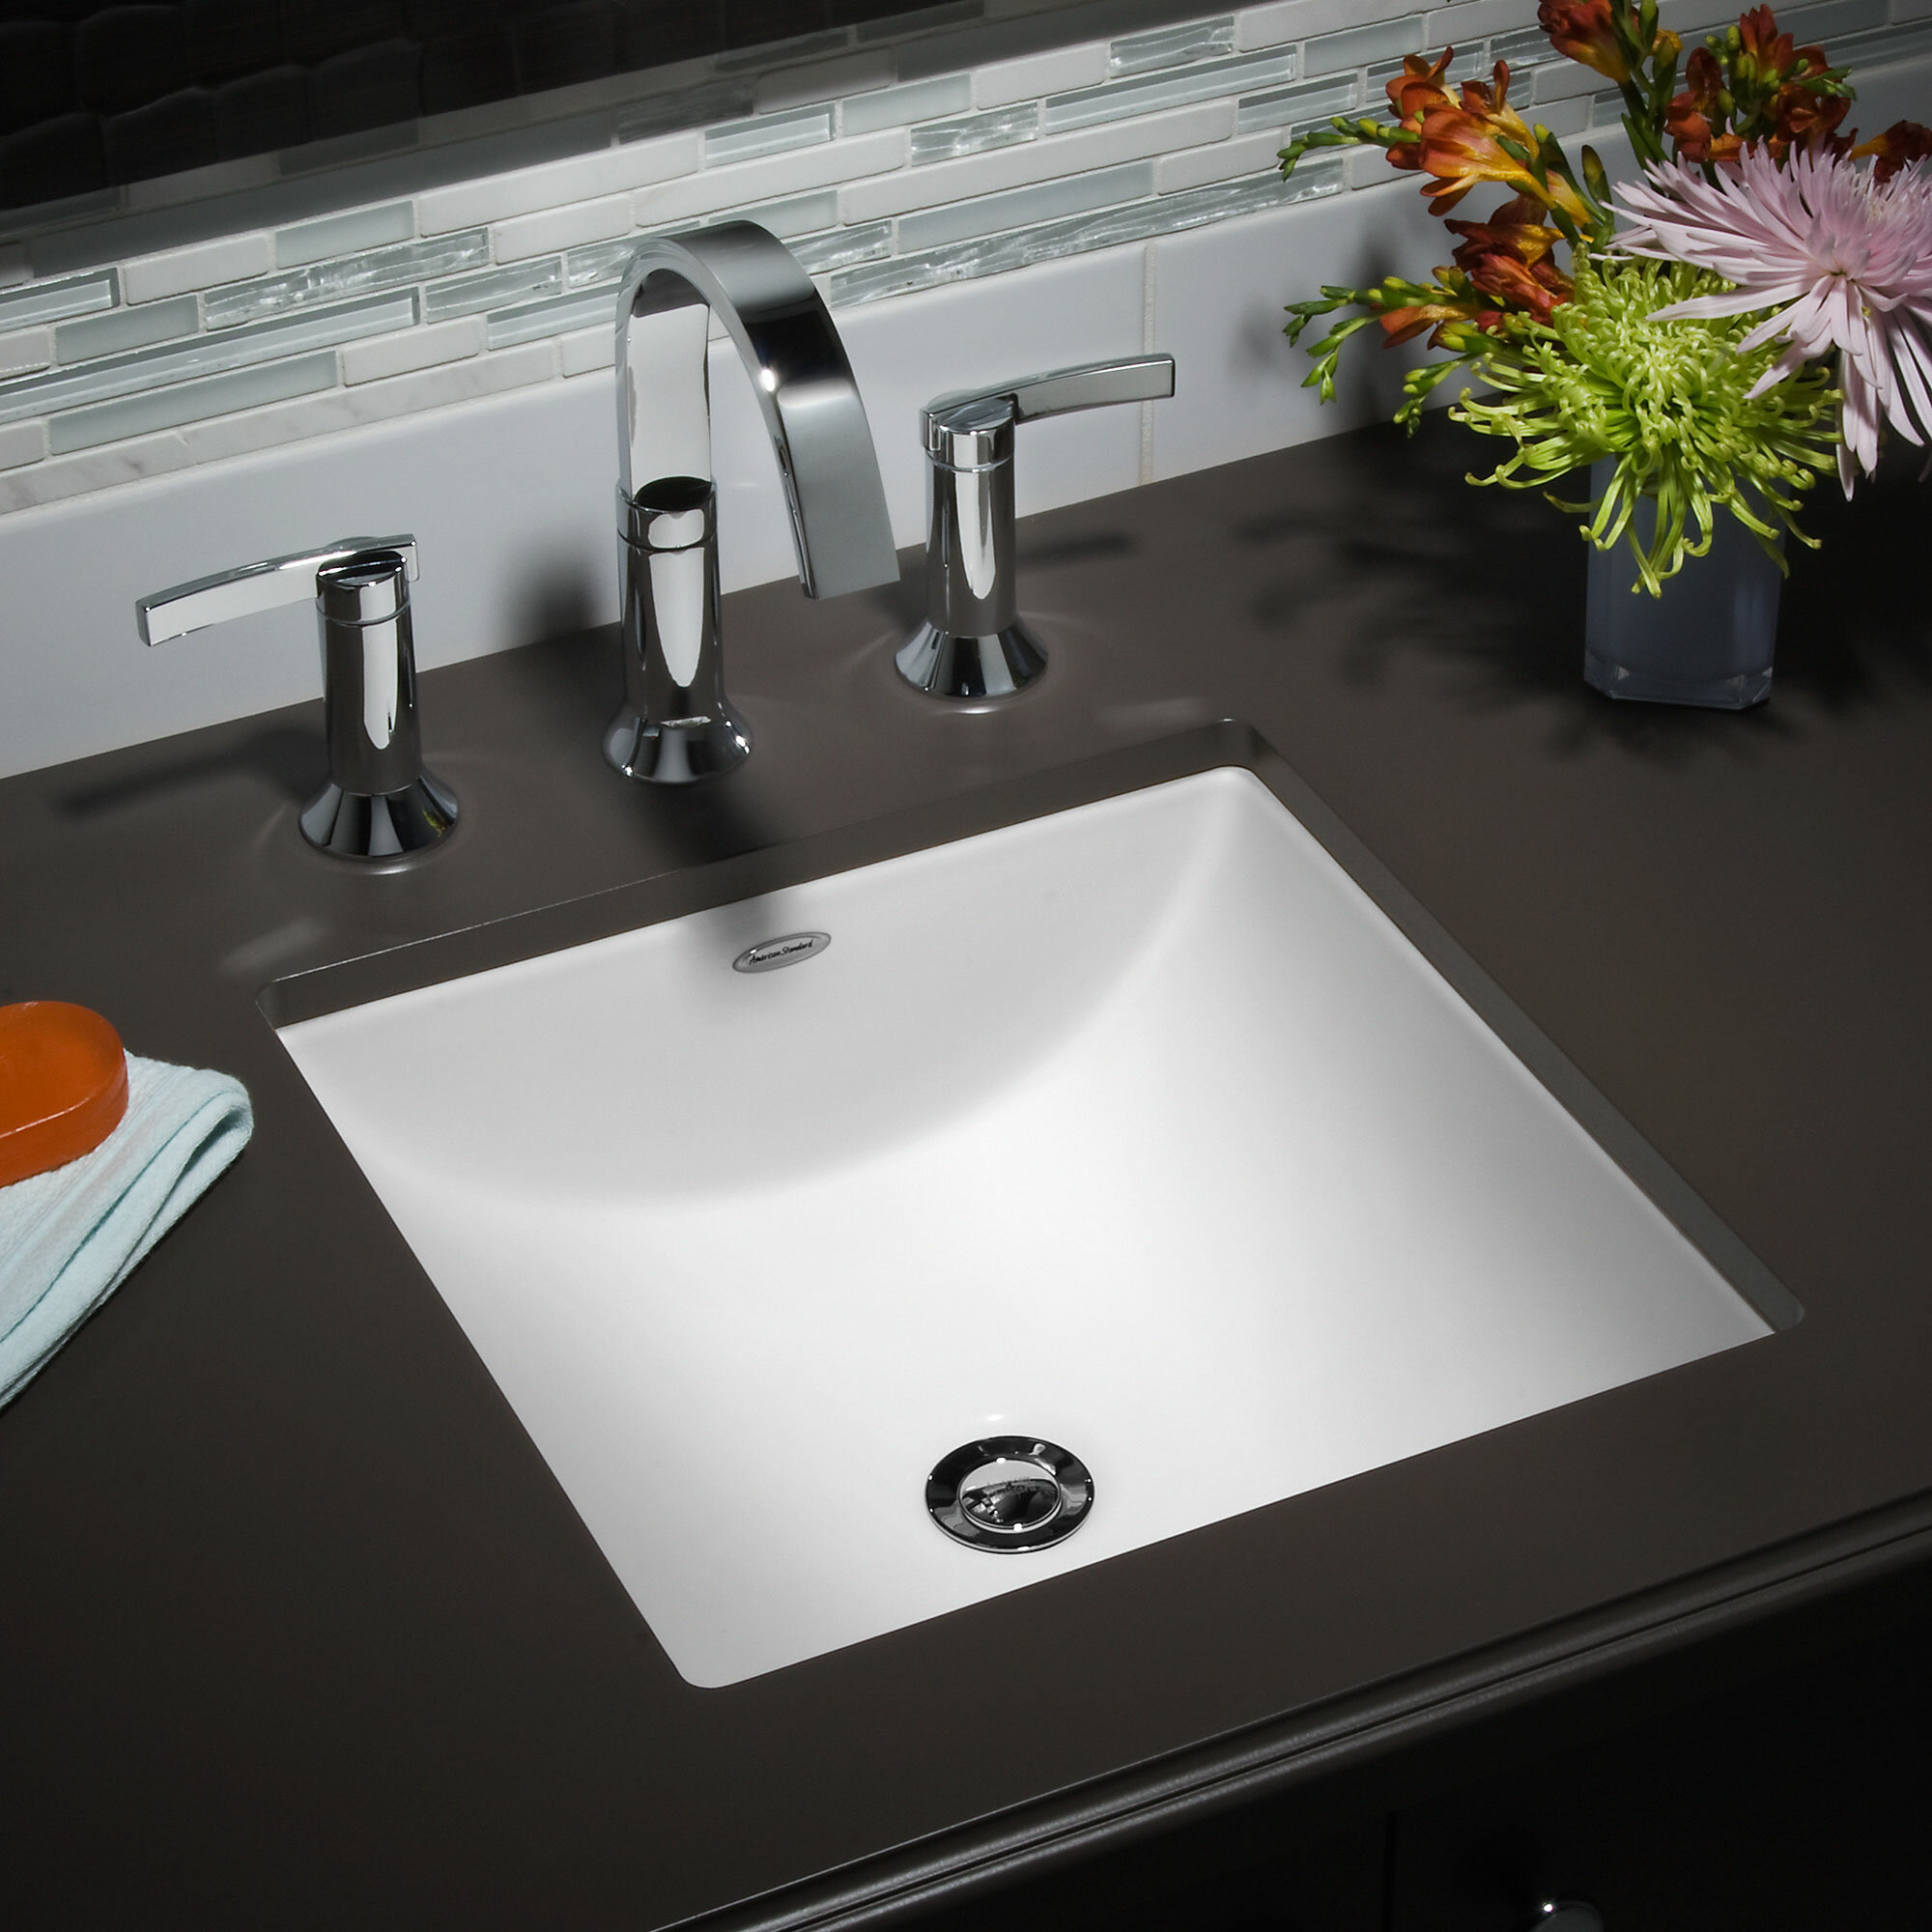 American Standard Studio Vitreous China Square Undermount Bathroom Sink With Overflow Reviews Wayfair